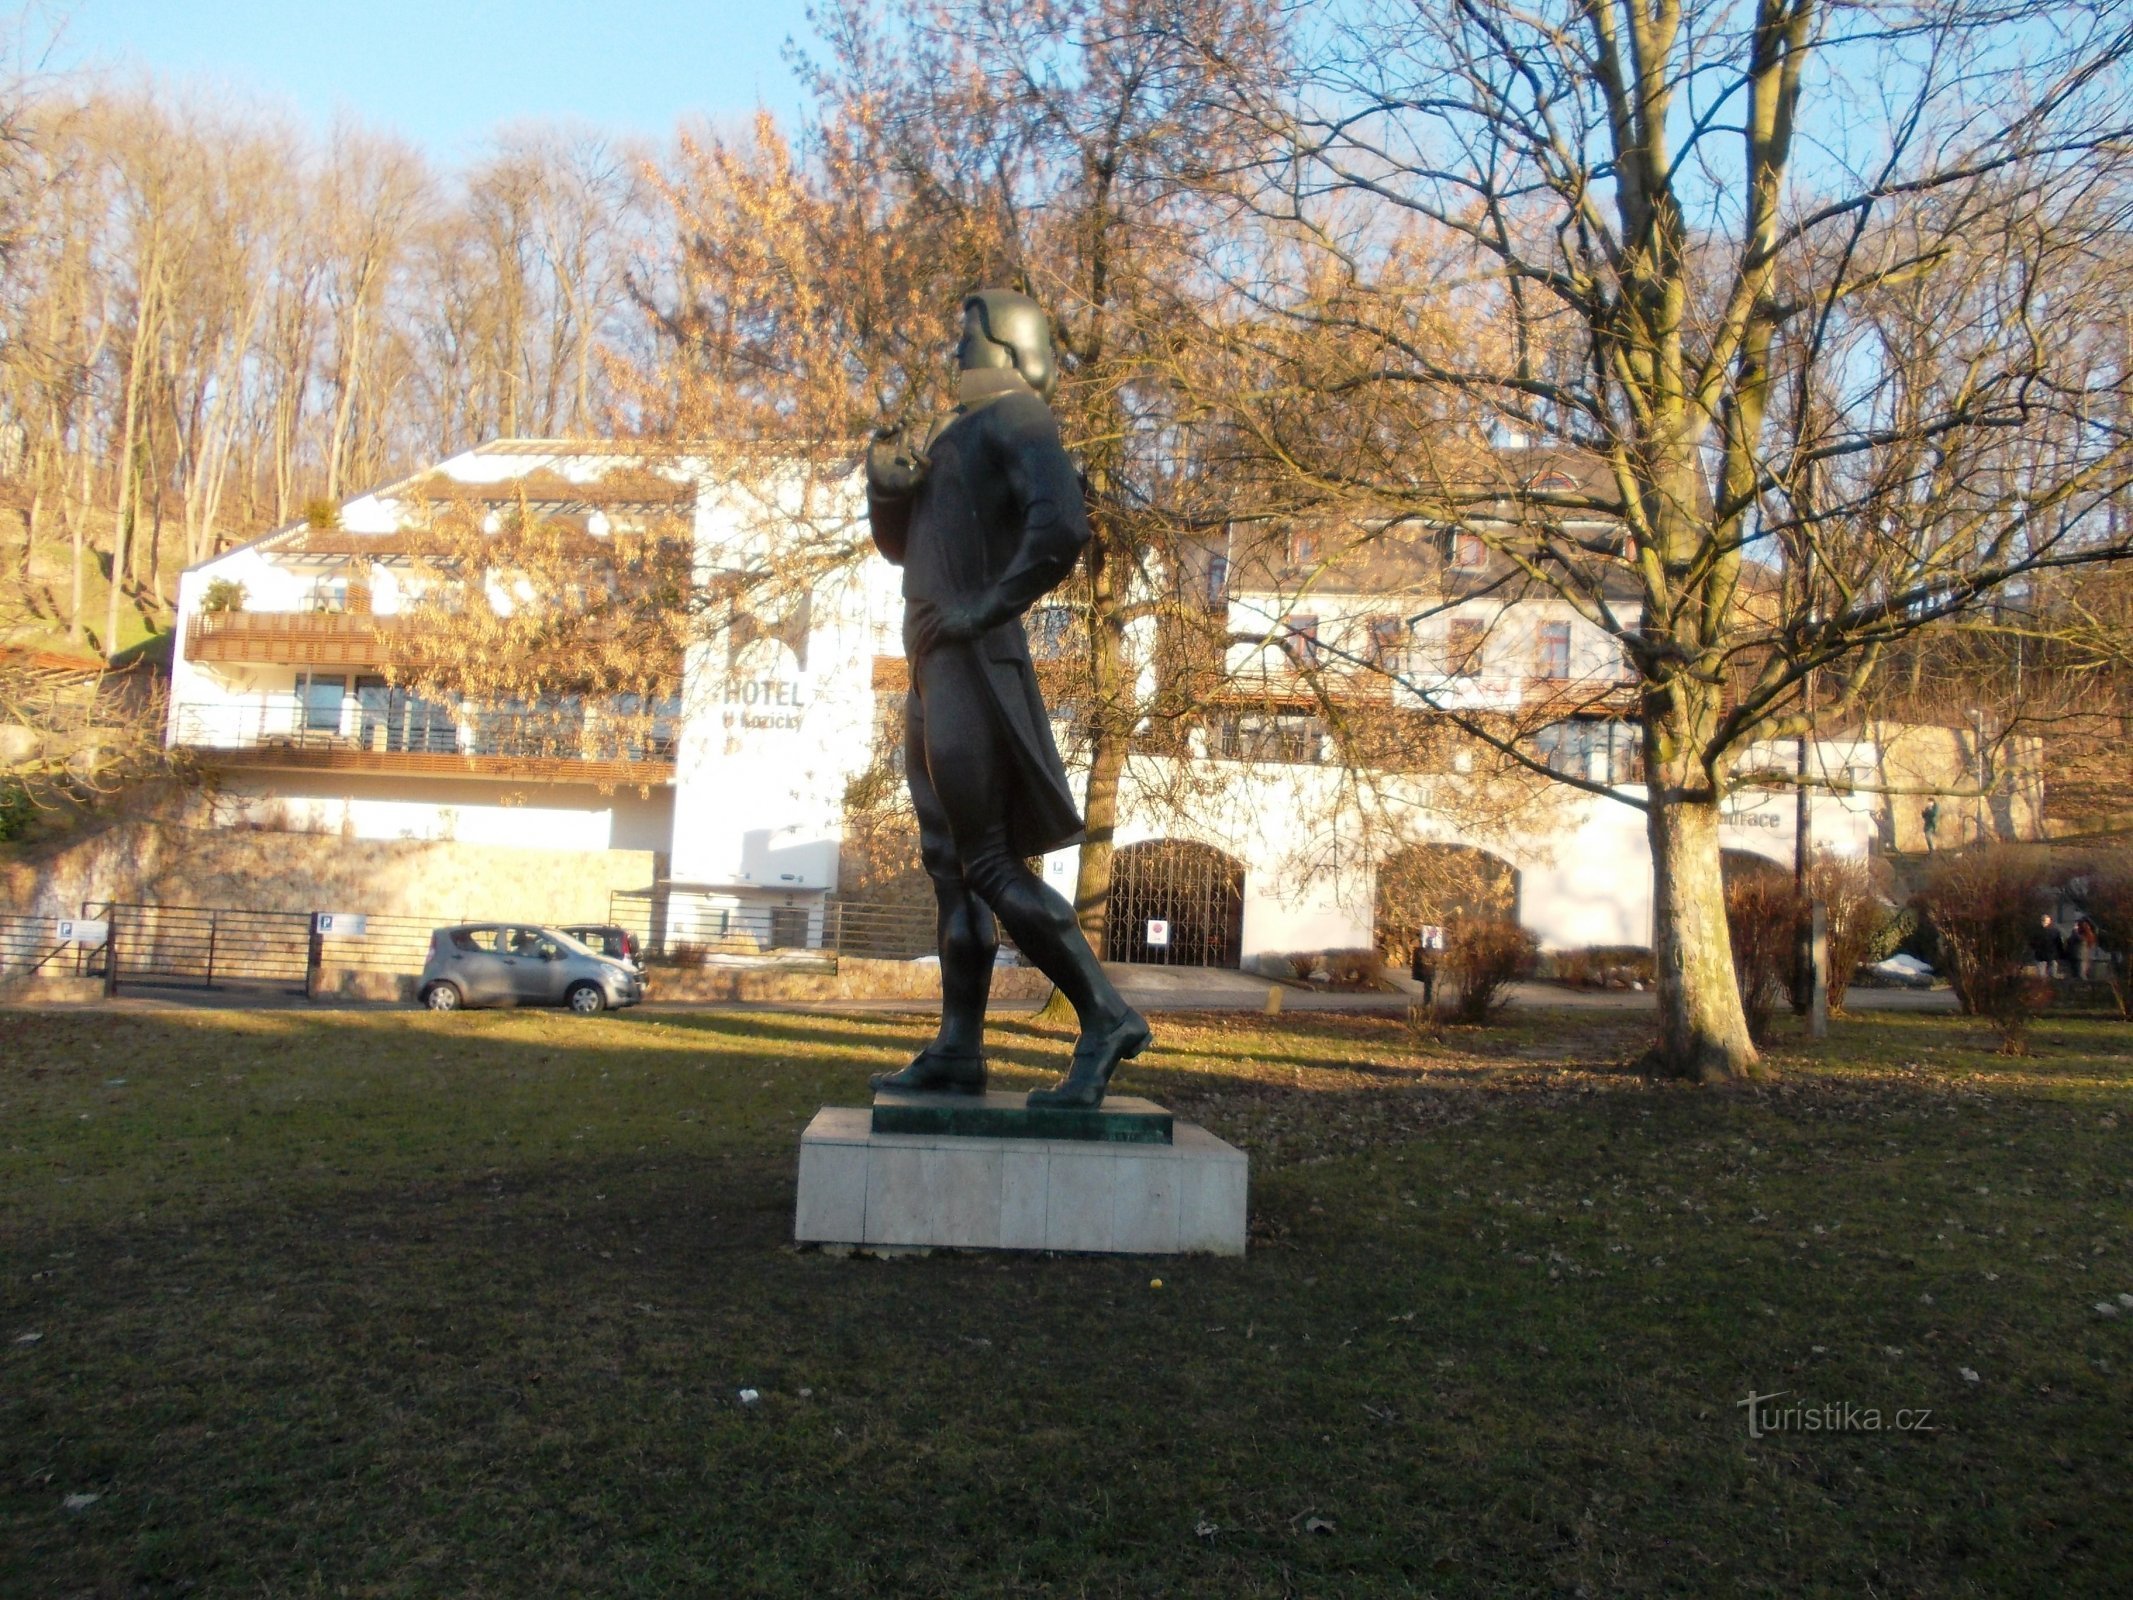 staty av Wolfgang Amadeus Mozart i parken